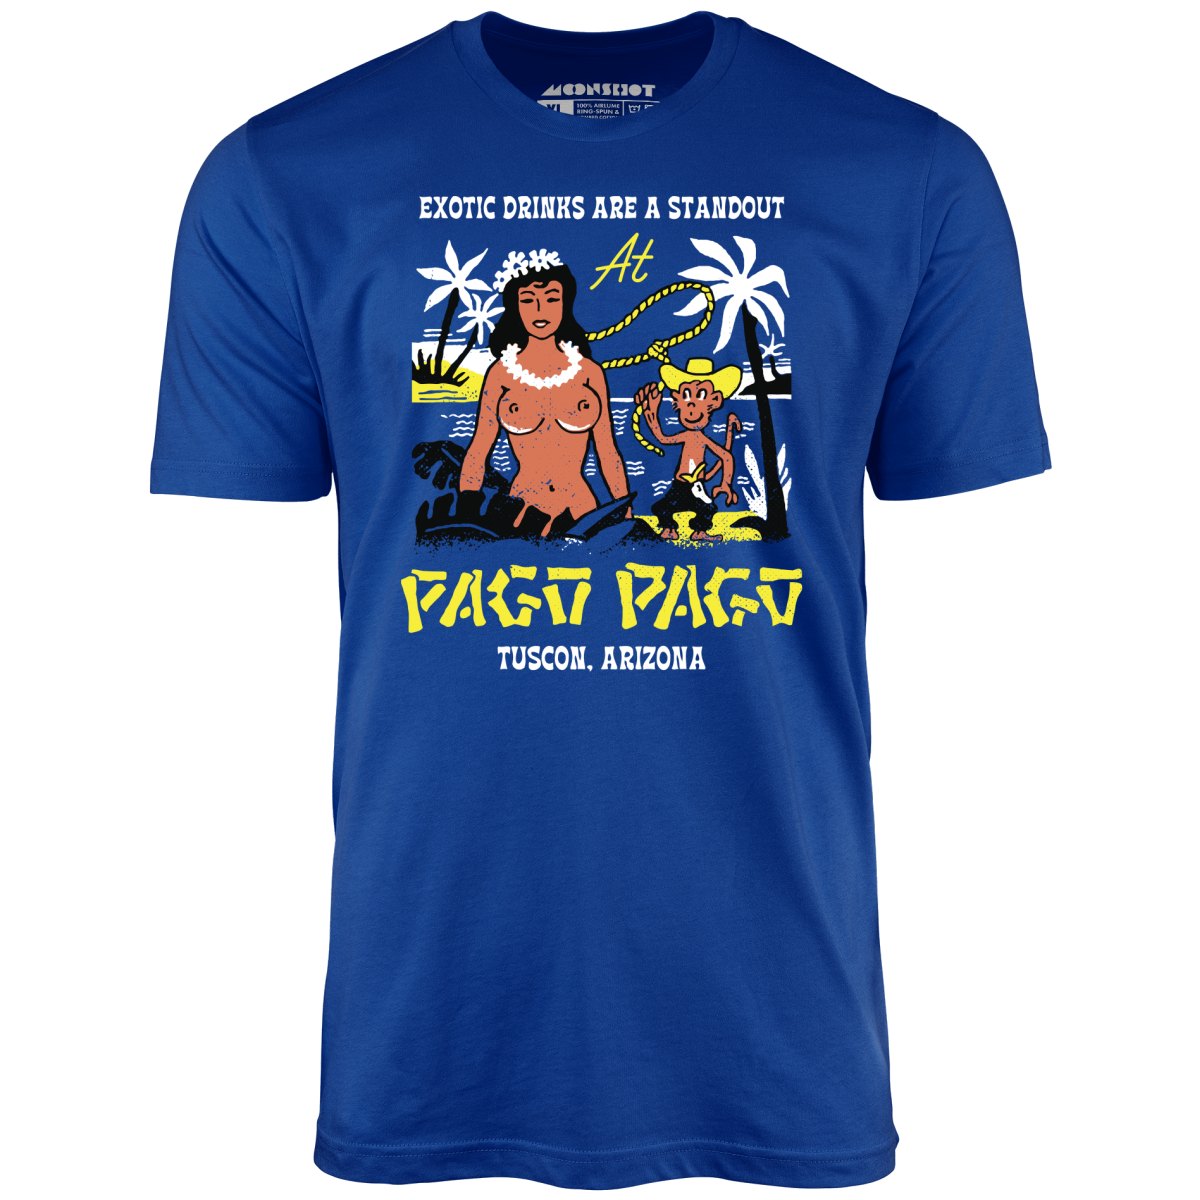 Pago Pago v2 - Tucson, AZ - Vintage Tiki Bar - Unisex T-Shirt